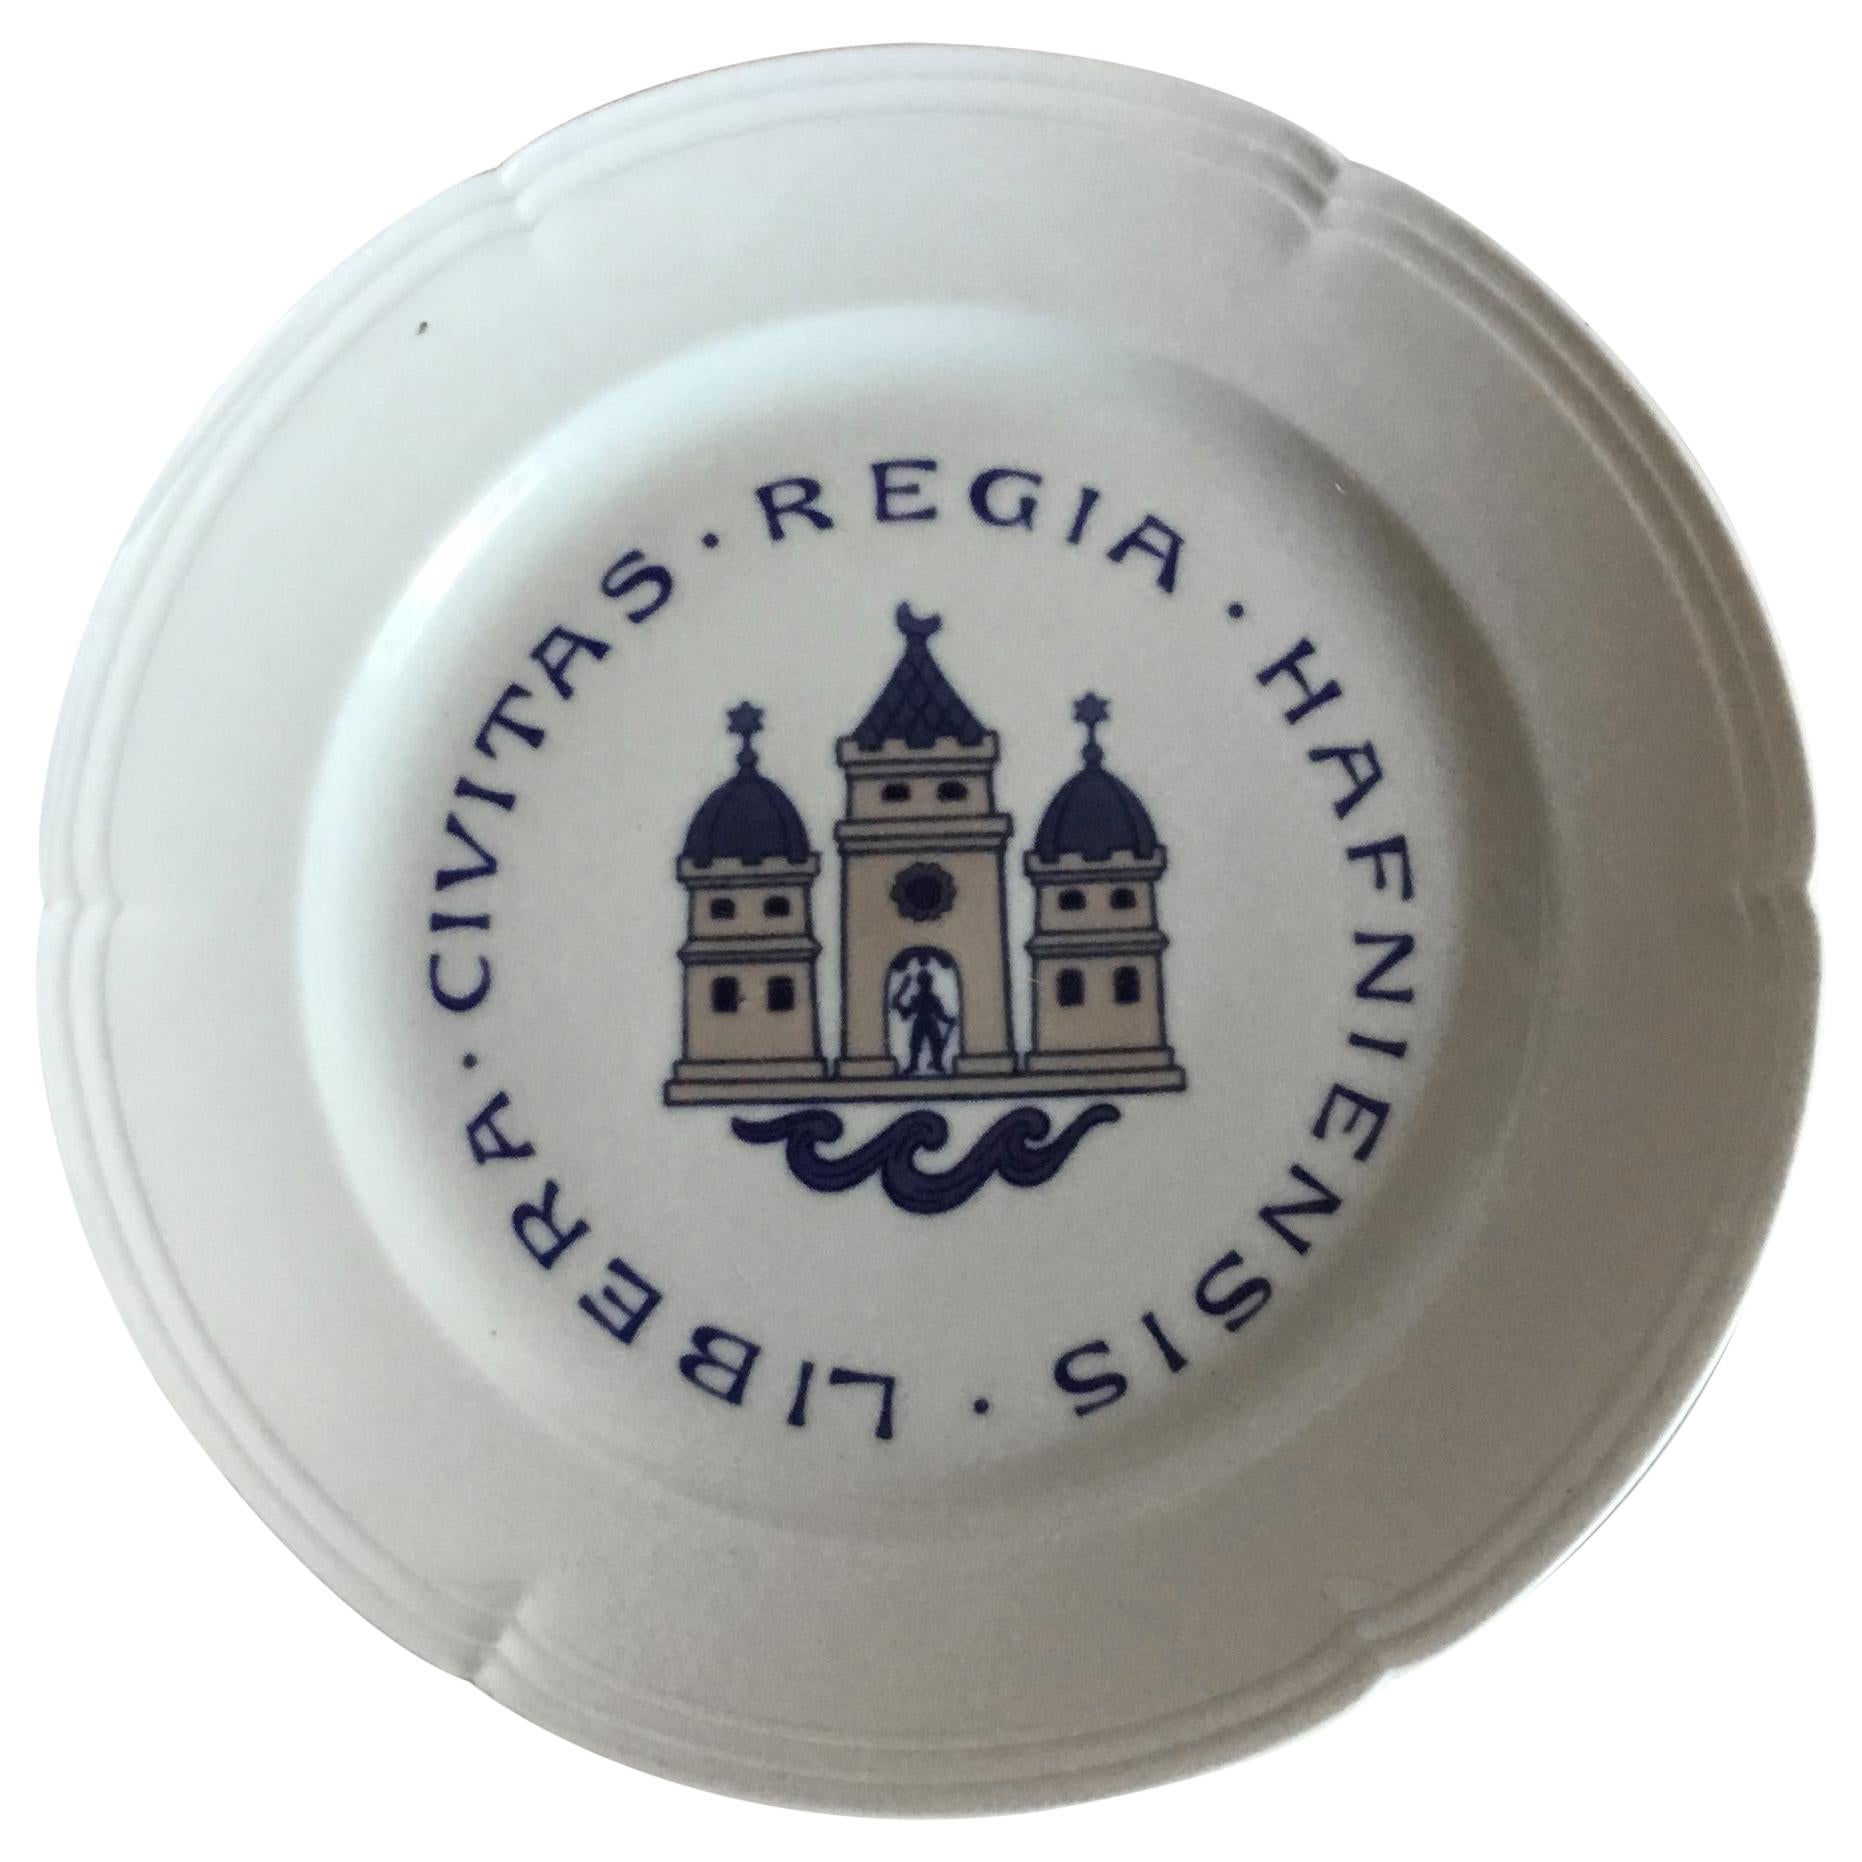 Bing & Grondahl Commemorative Plate from 1902-1914 Copenhagen City, Unique For Sale